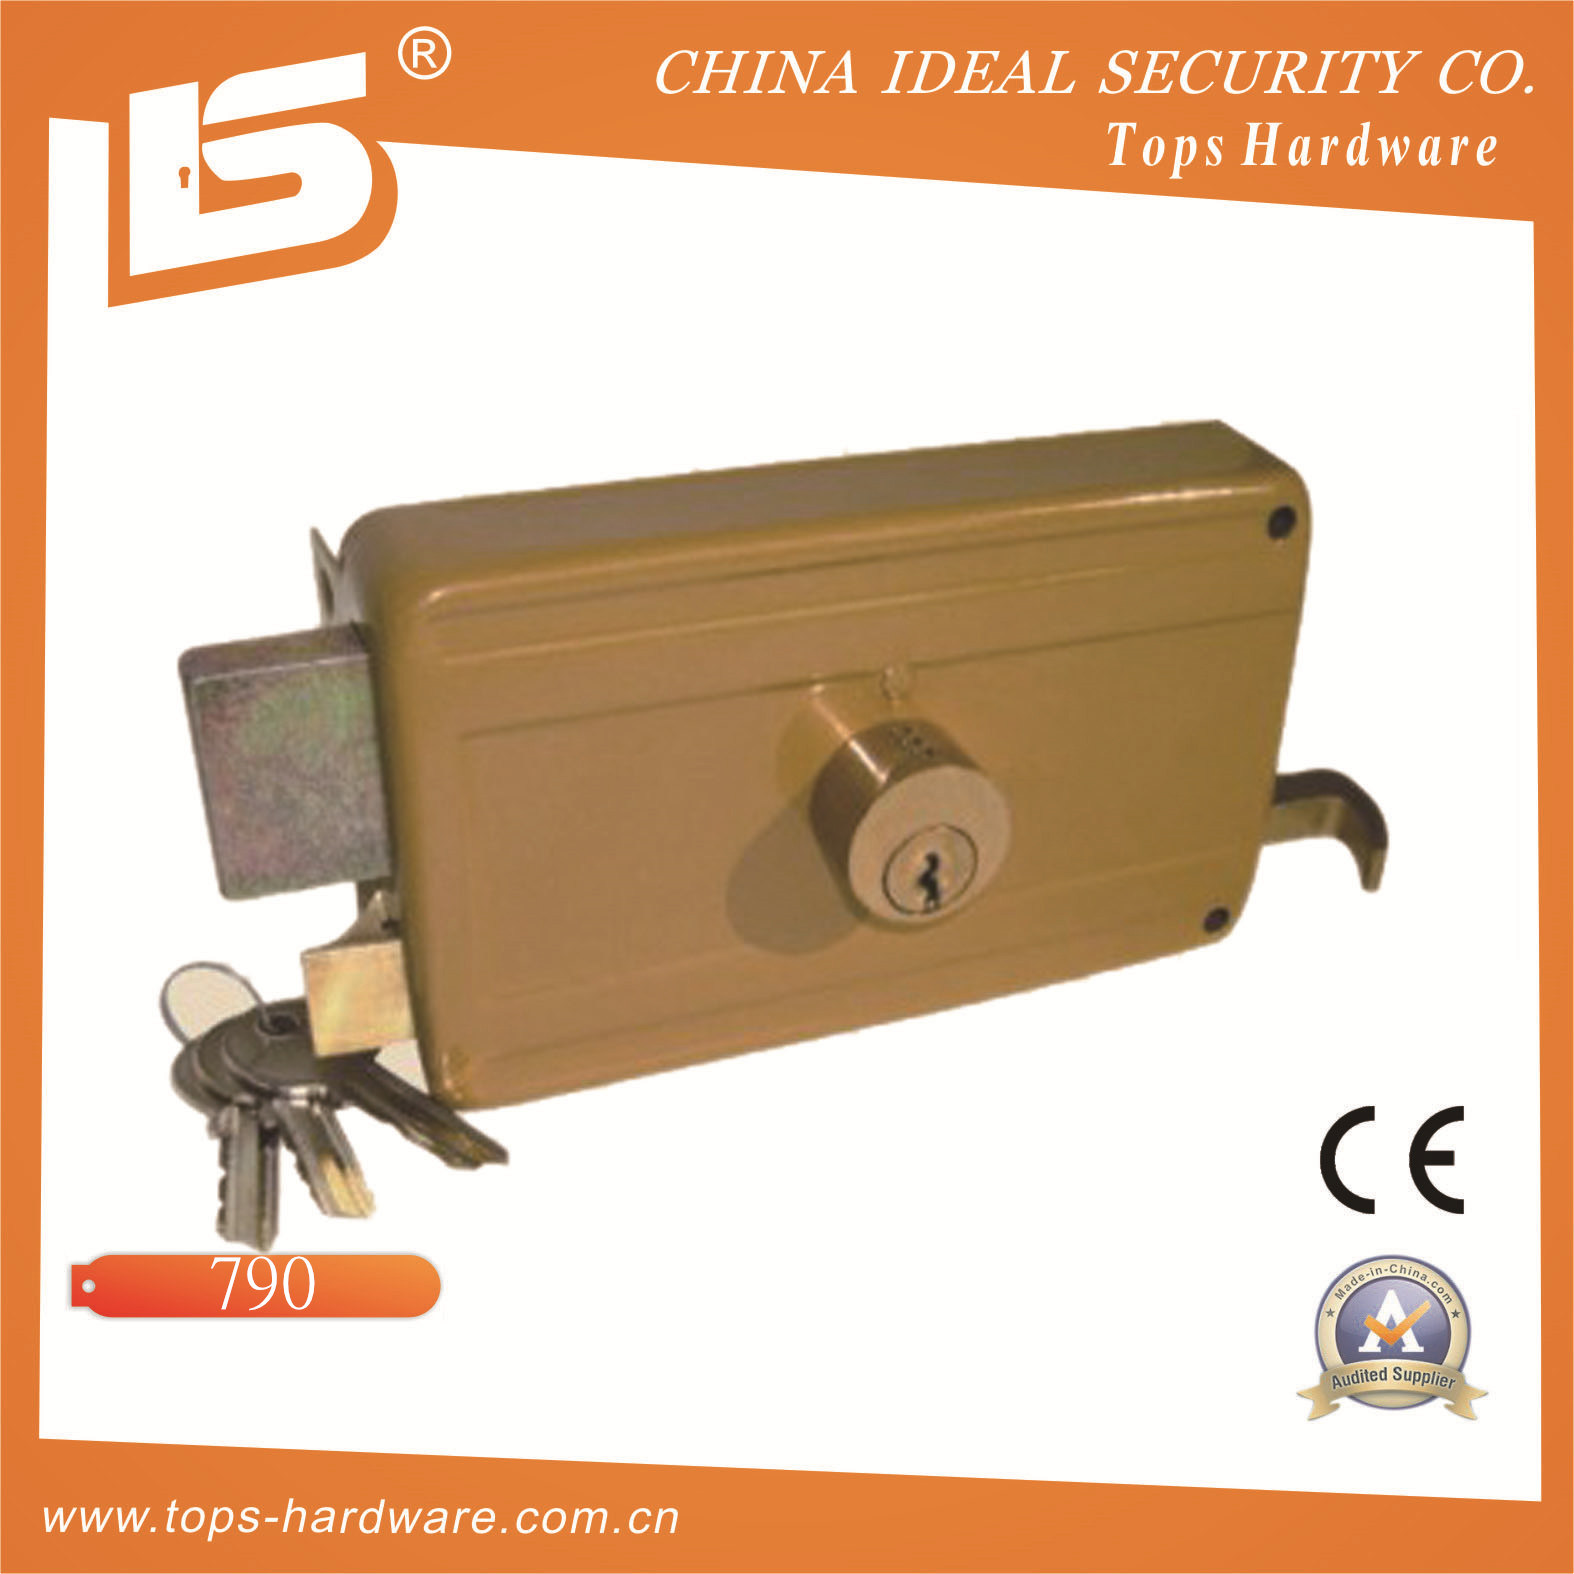 Security High Quality Door Rim Lock (790)